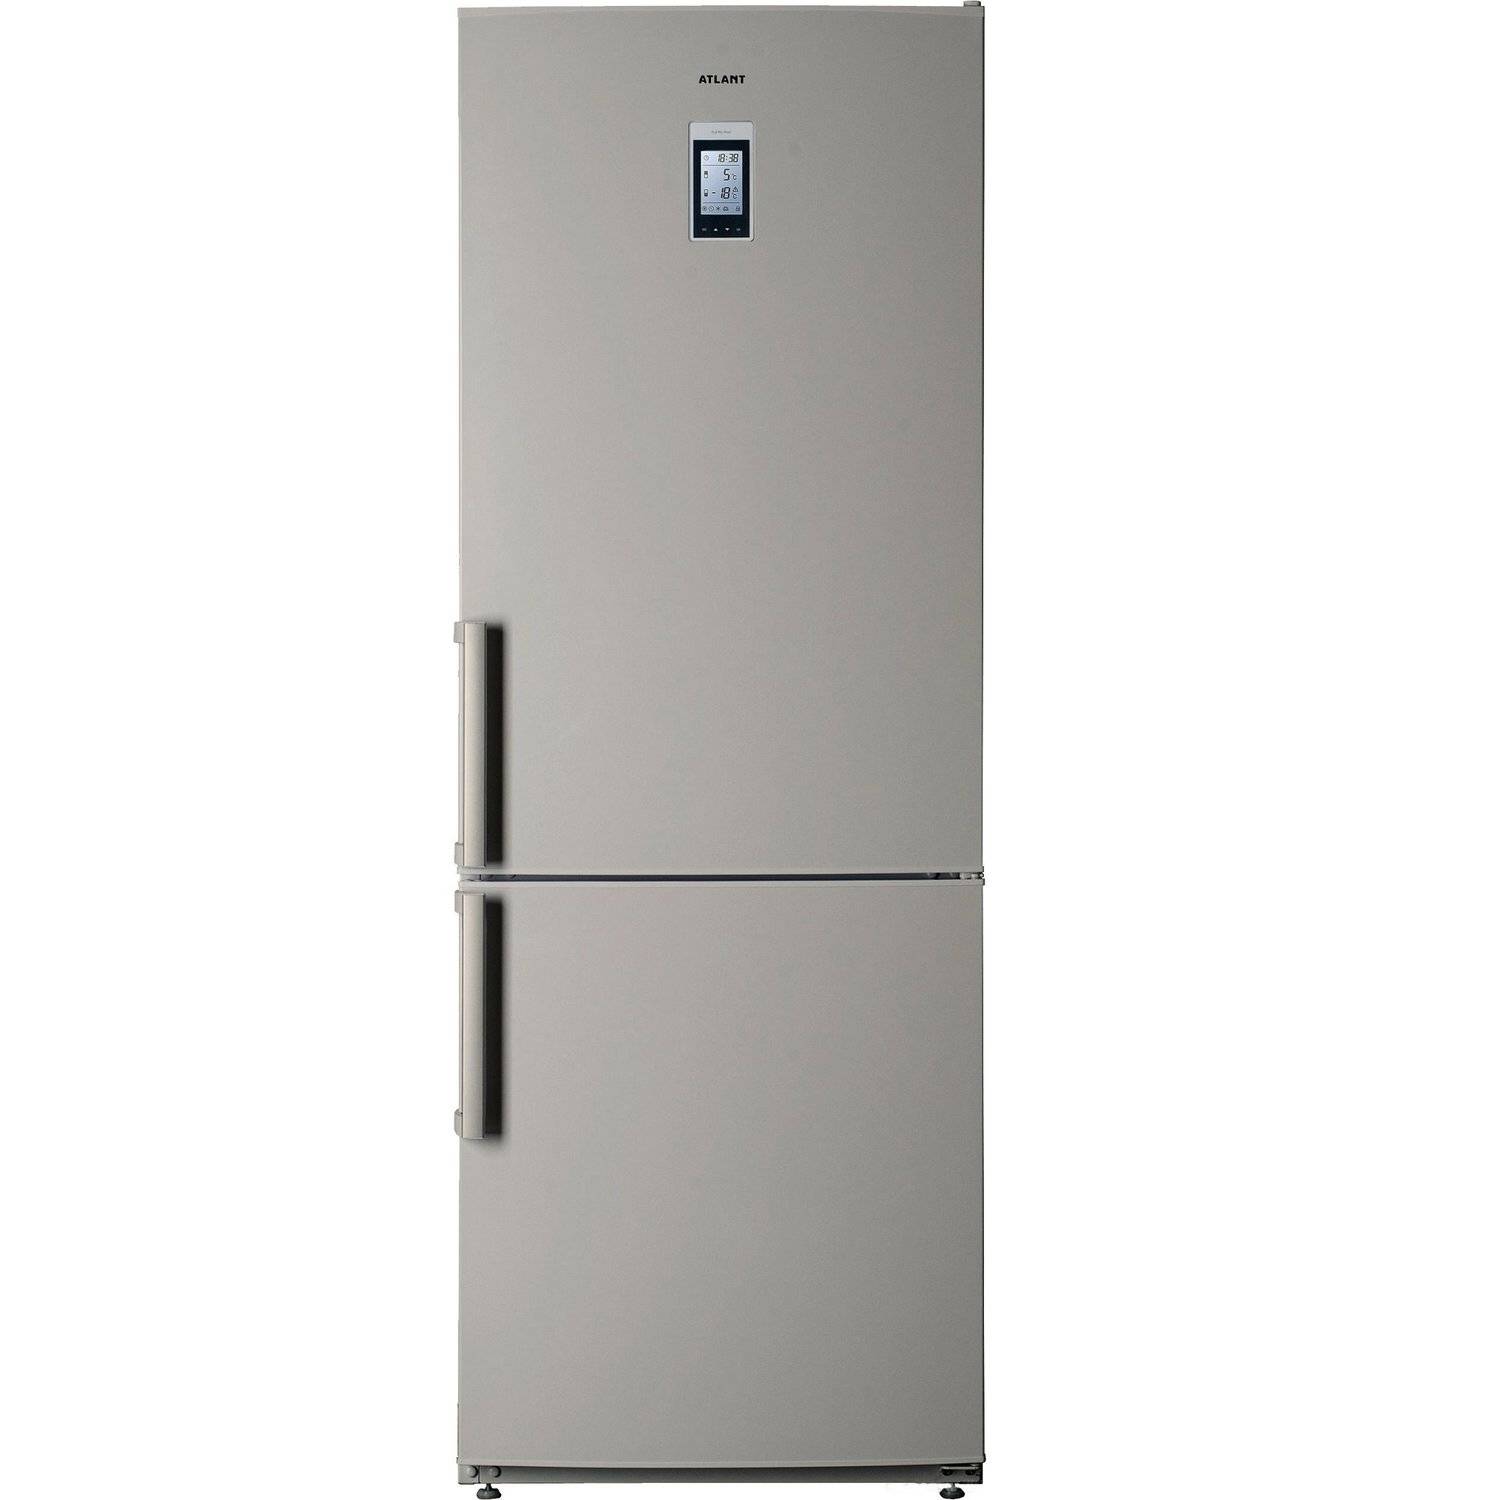 Холодильник ру атлант. Хм-4524-080-ND. Холодильник ATLANT хм 4524-080 ND. Холодильник ATLANT С дисплеем хм-4524-090-ND. LG ga-m539 ZMQZ холодильник.